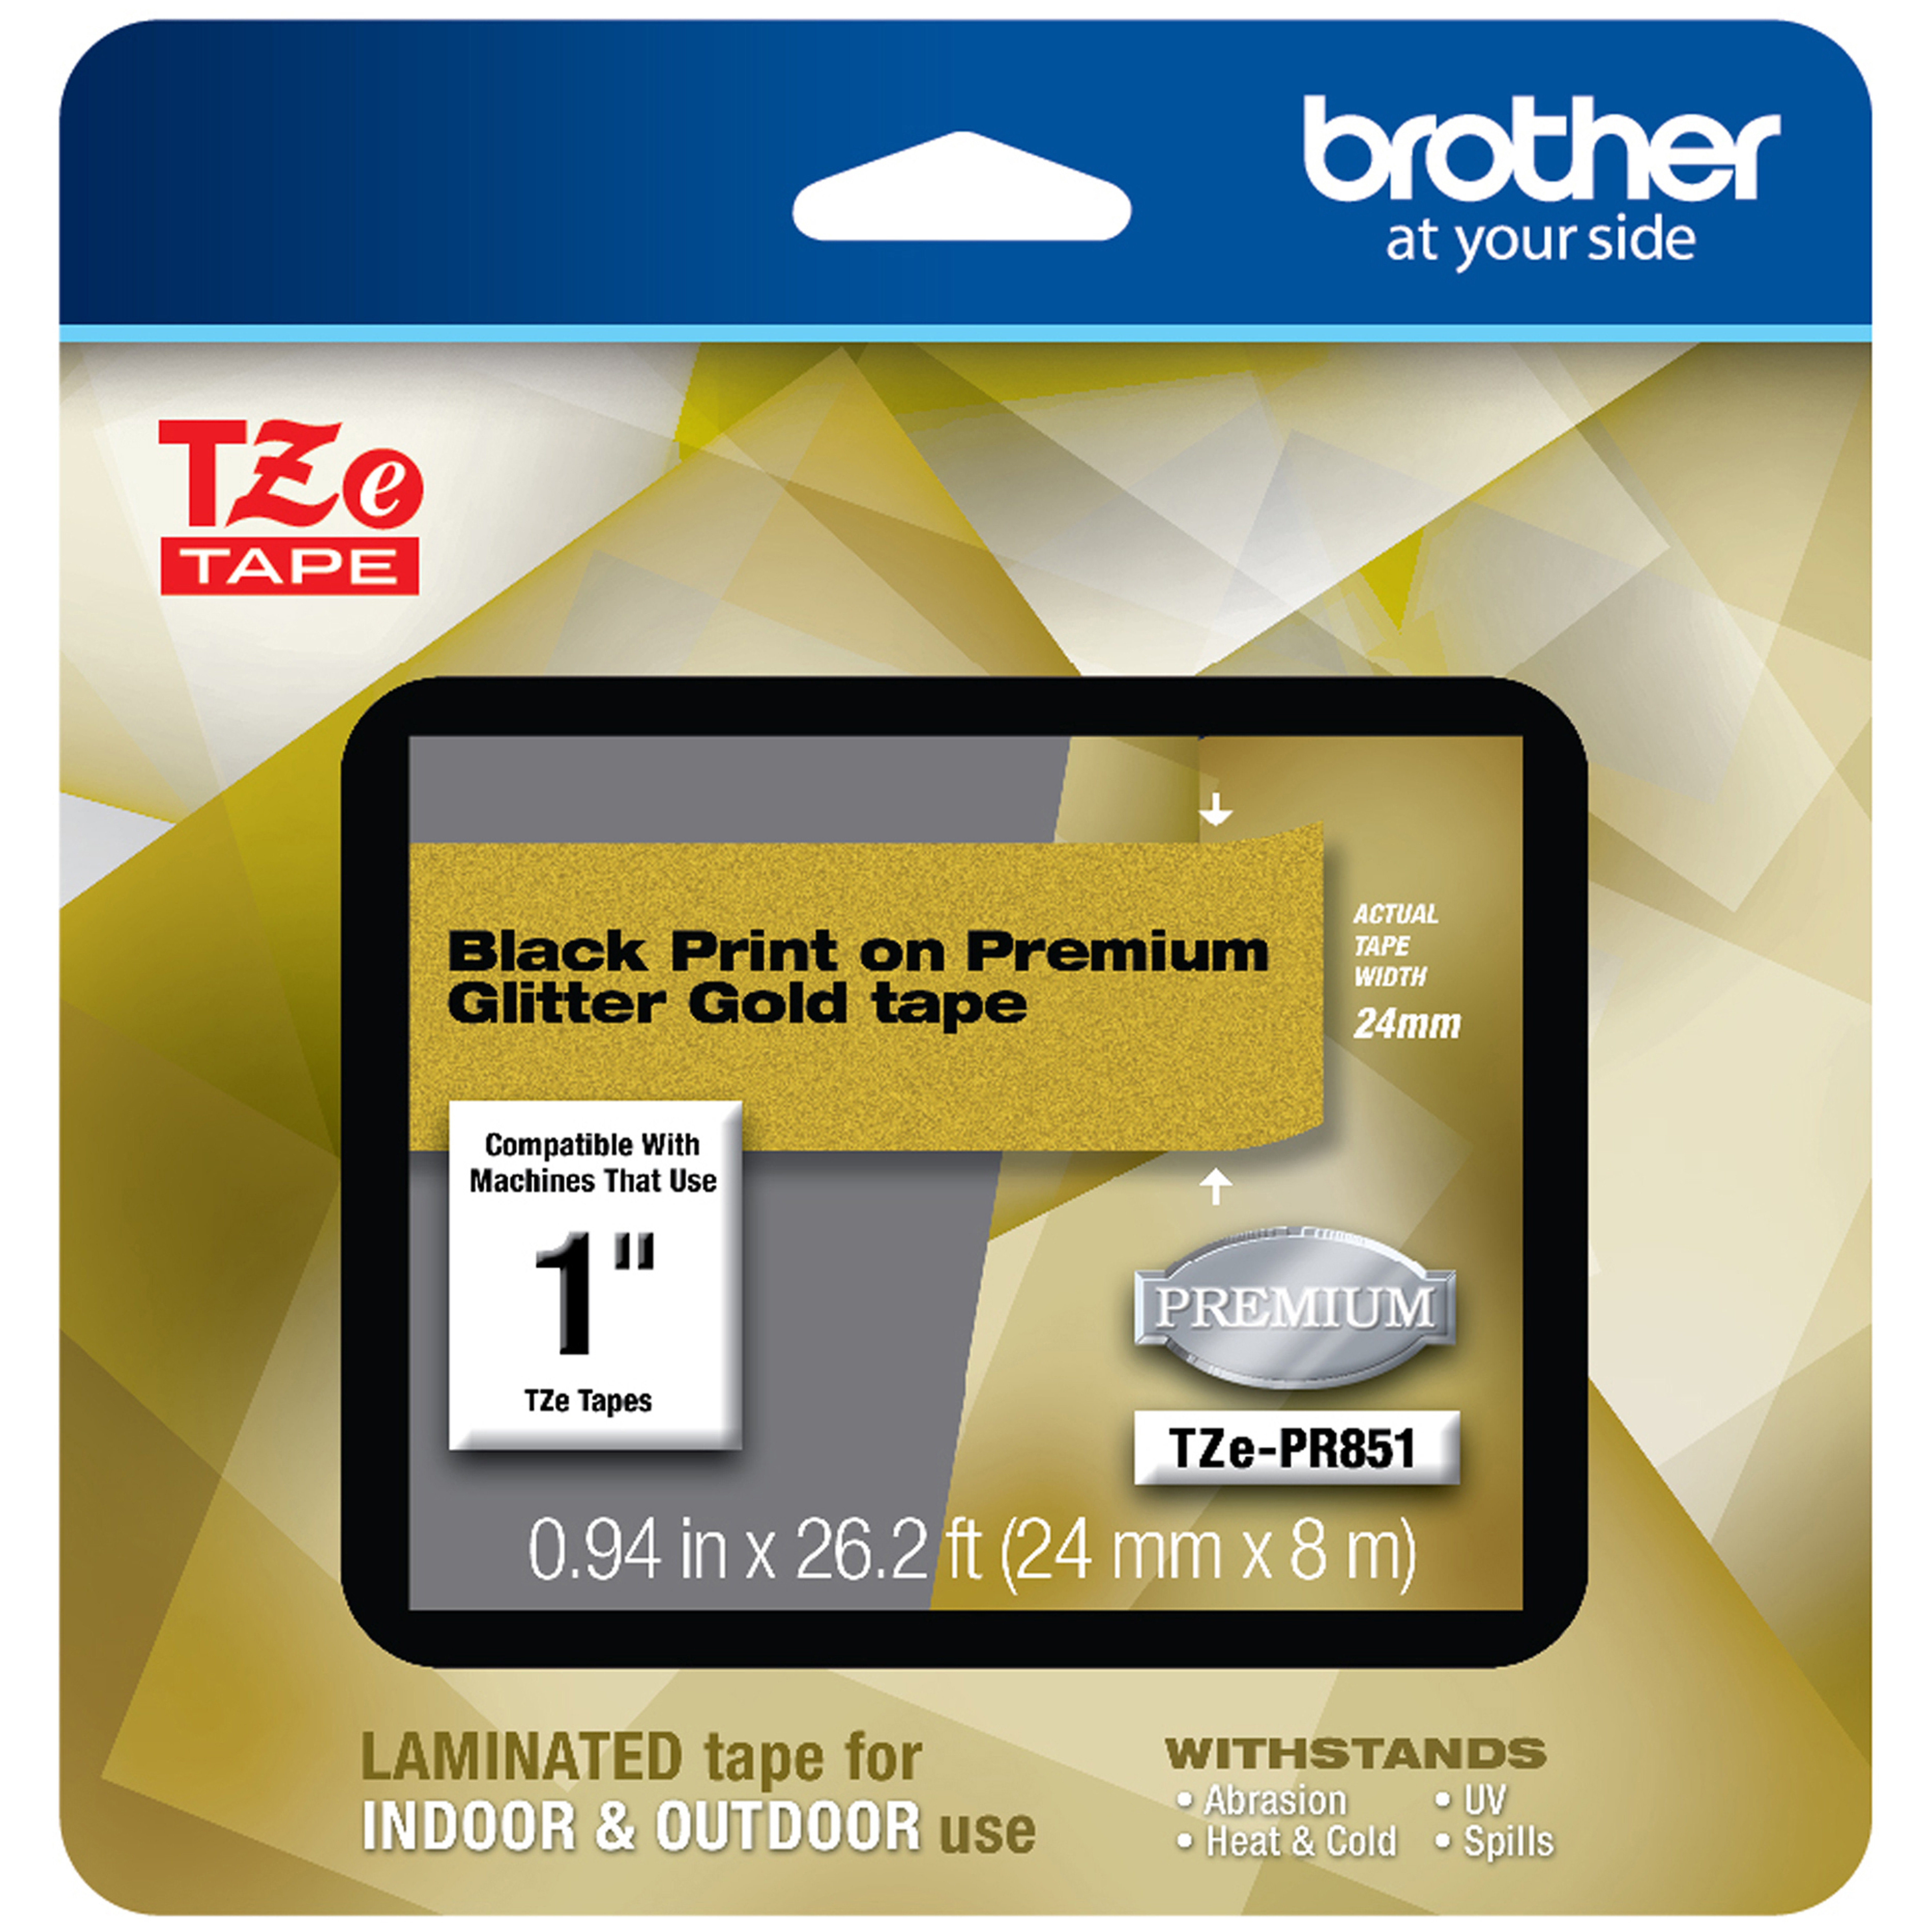  Brother TZEPR851 TZe Premium Laminated Tape, 0.94 x 26.2 ft, Black on Gold (BRTTZEPR851) 